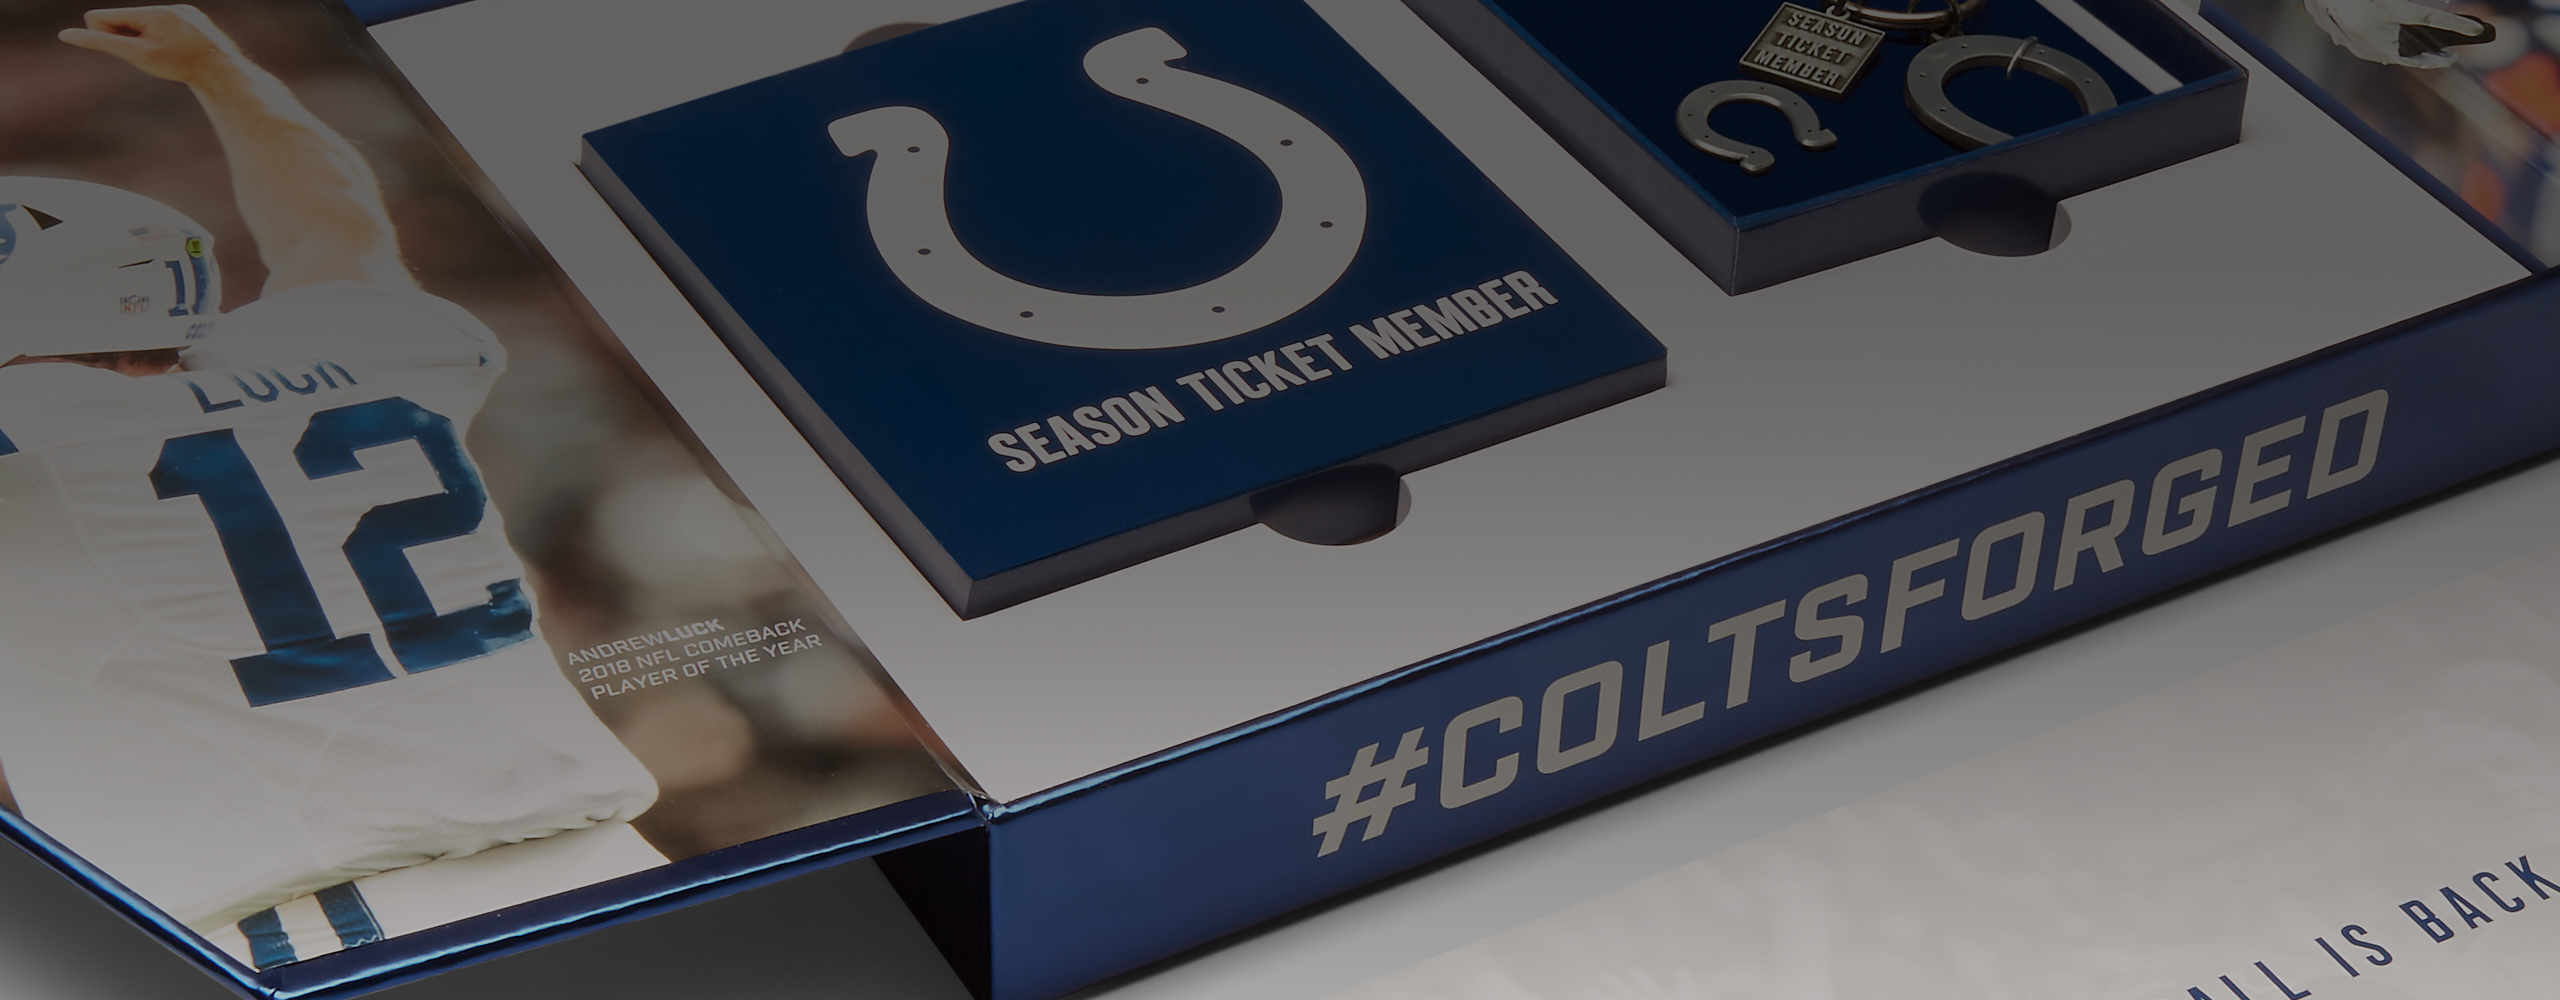 Baltimore Colts NFL Season Tickets Box edge